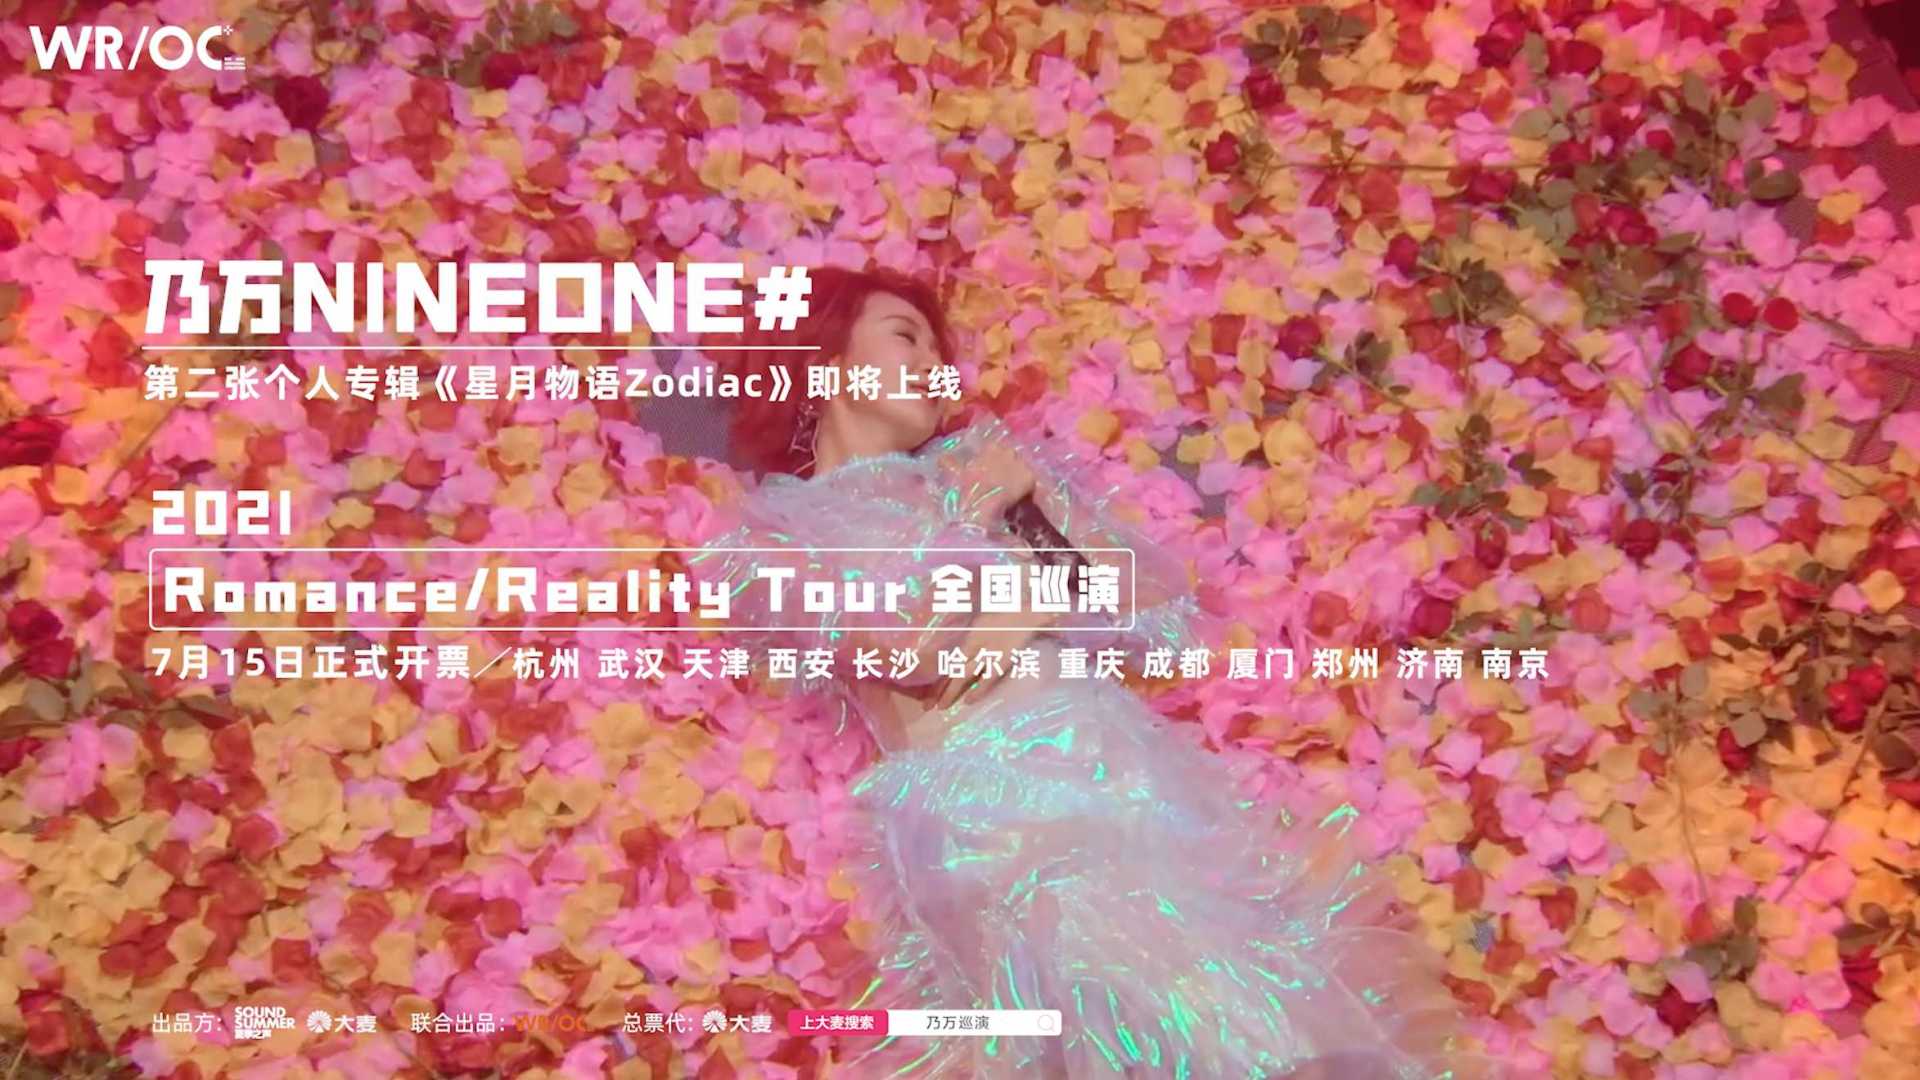 乃万NINEONE Romance/Reality Tour 巡演官方宣传片